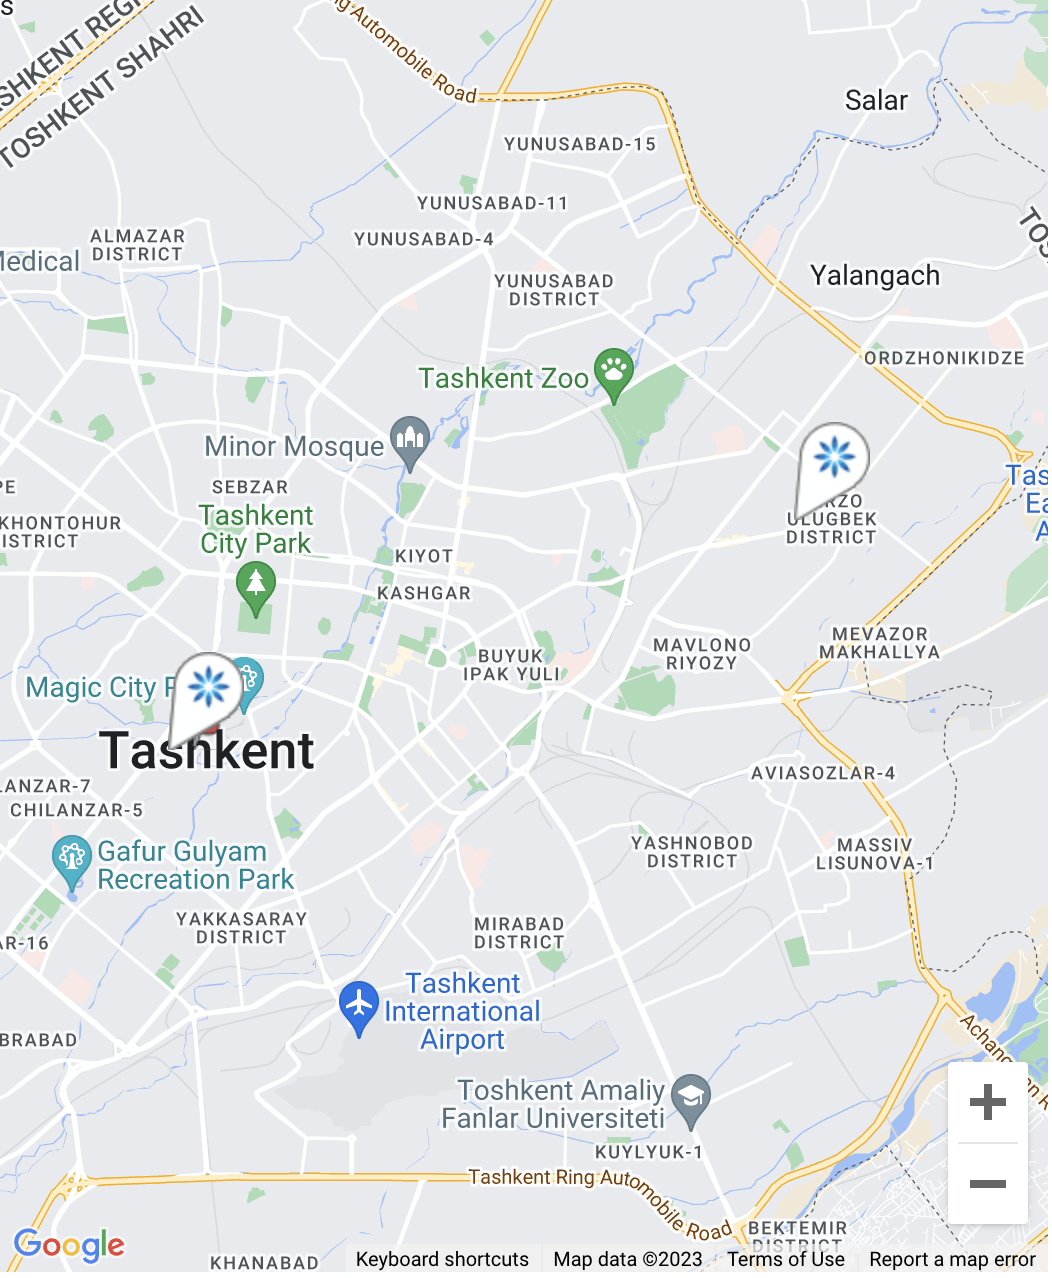 Find an Invisalign provider in Tashkent